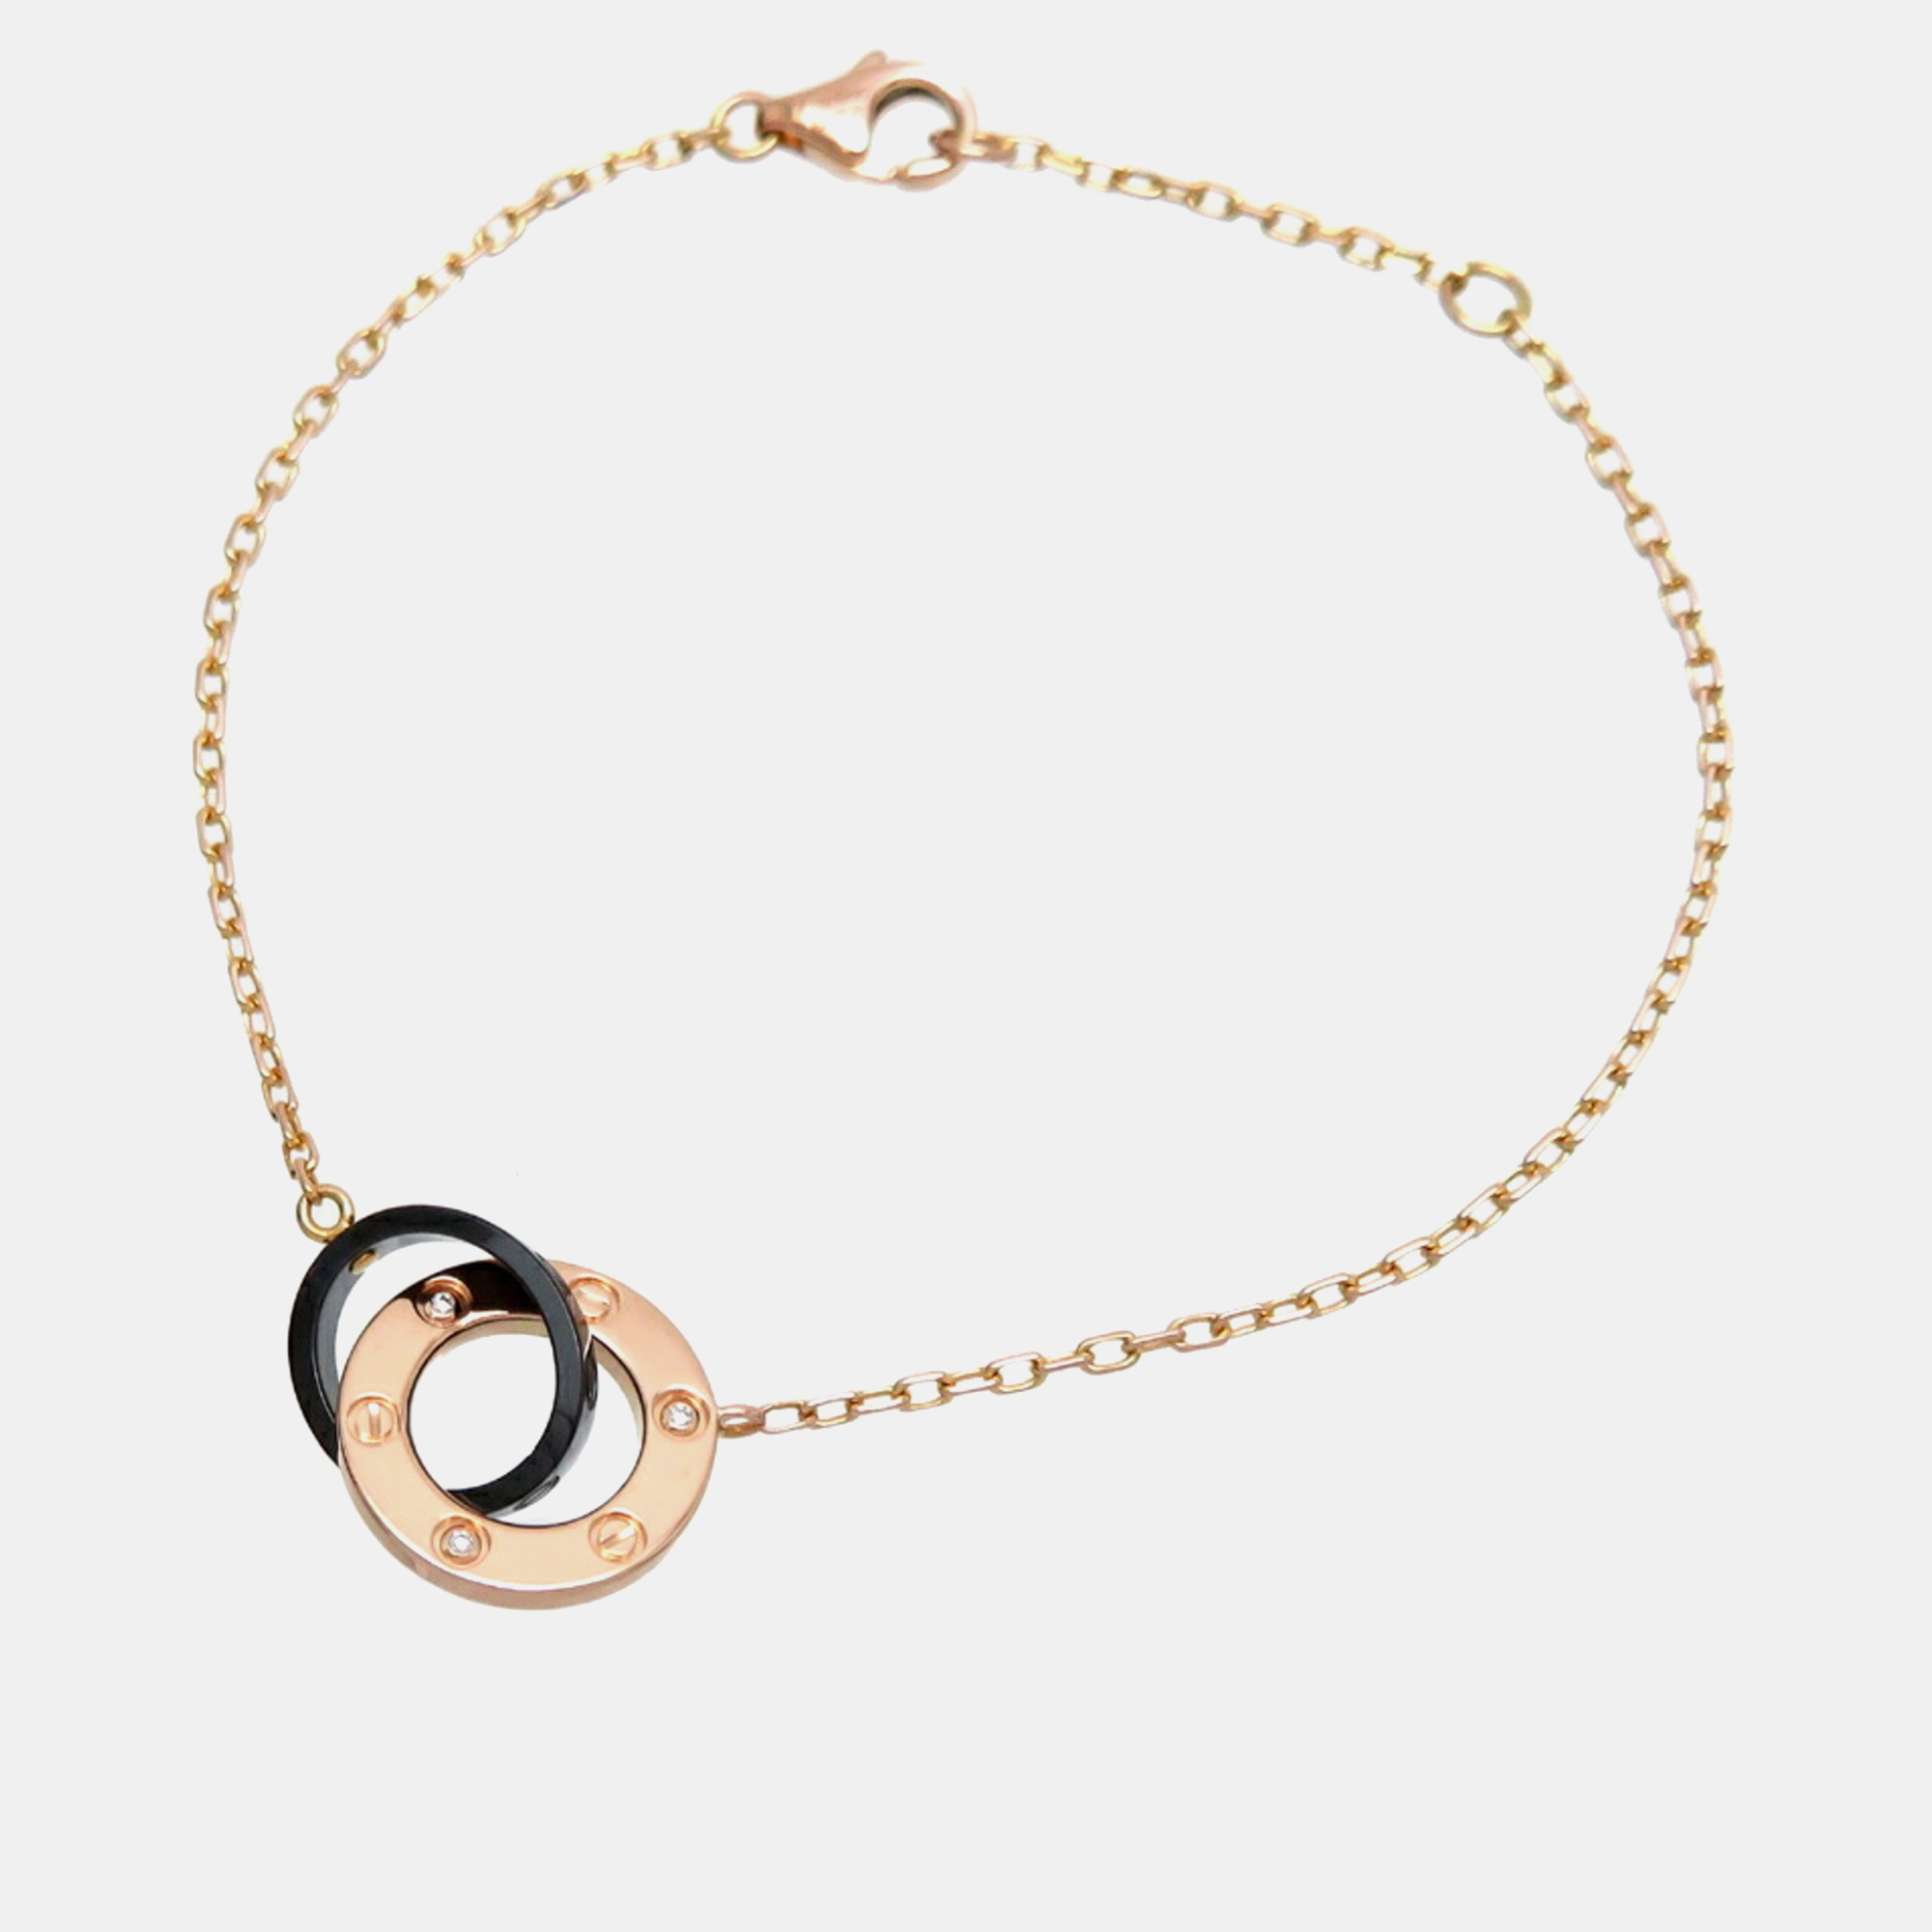 Cartier 18k rose gold love chain bracelet